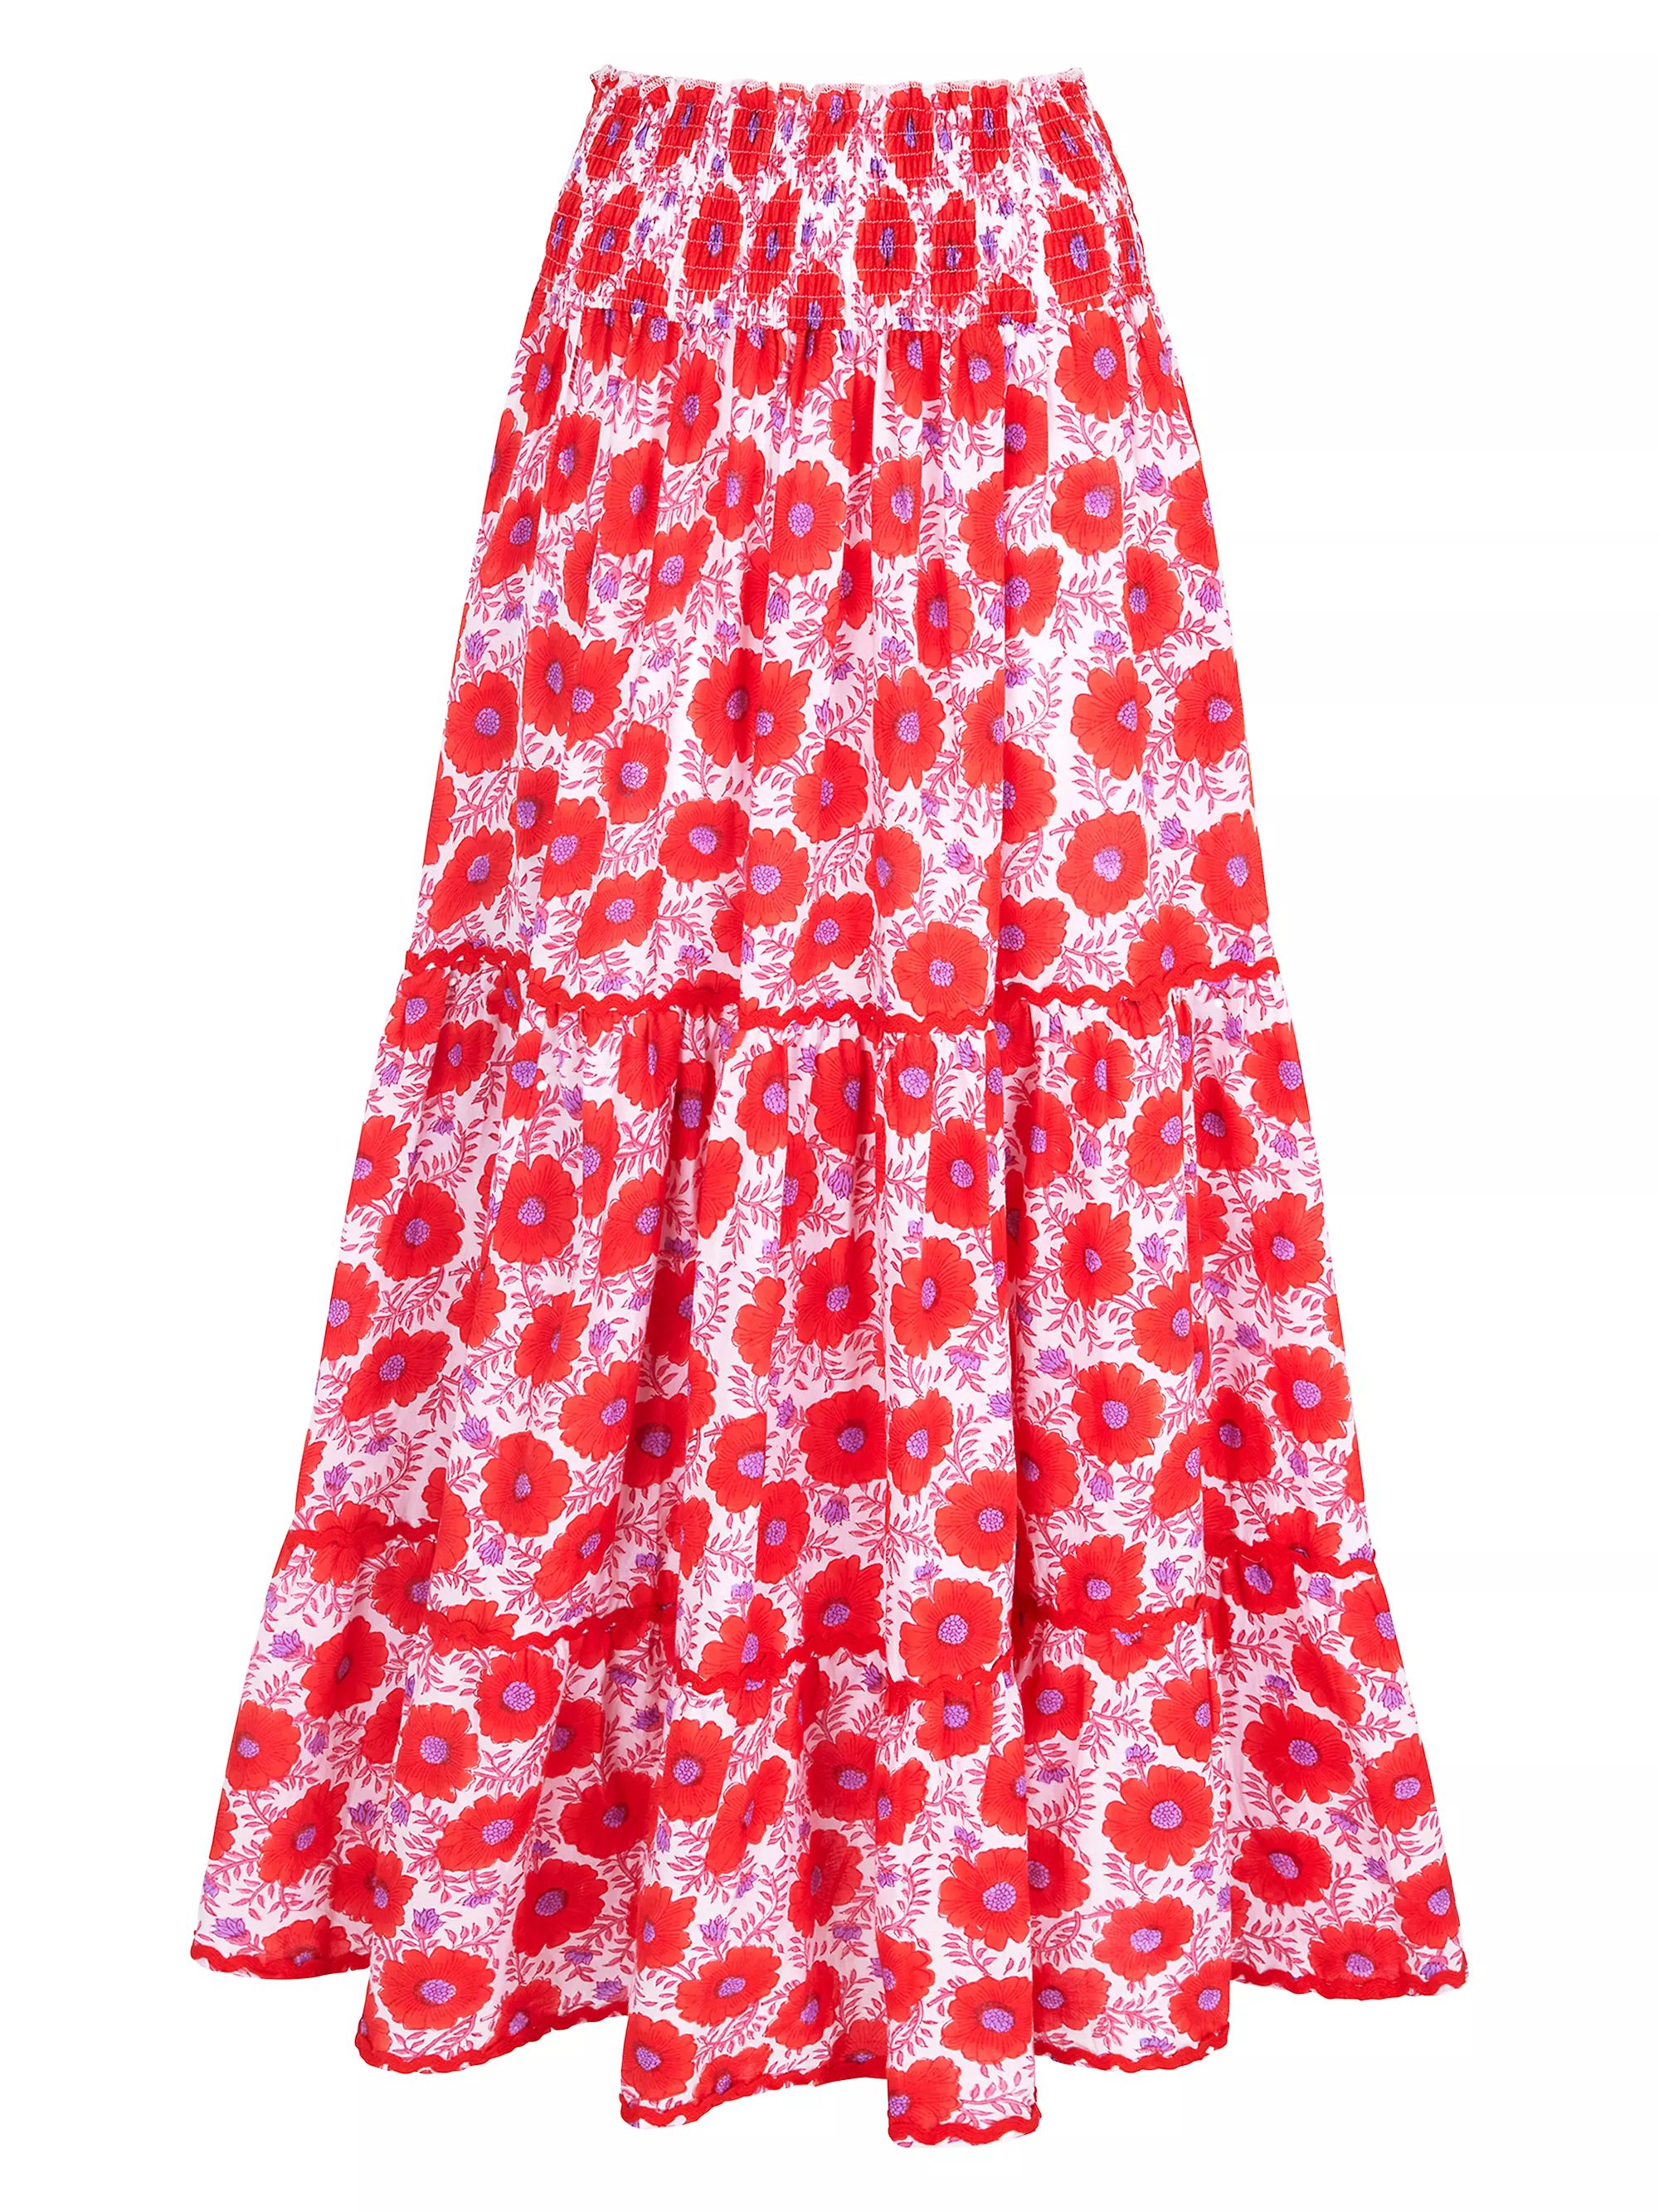 Geranium Poppy Lottie Skirt | Saks Fifth Avenue